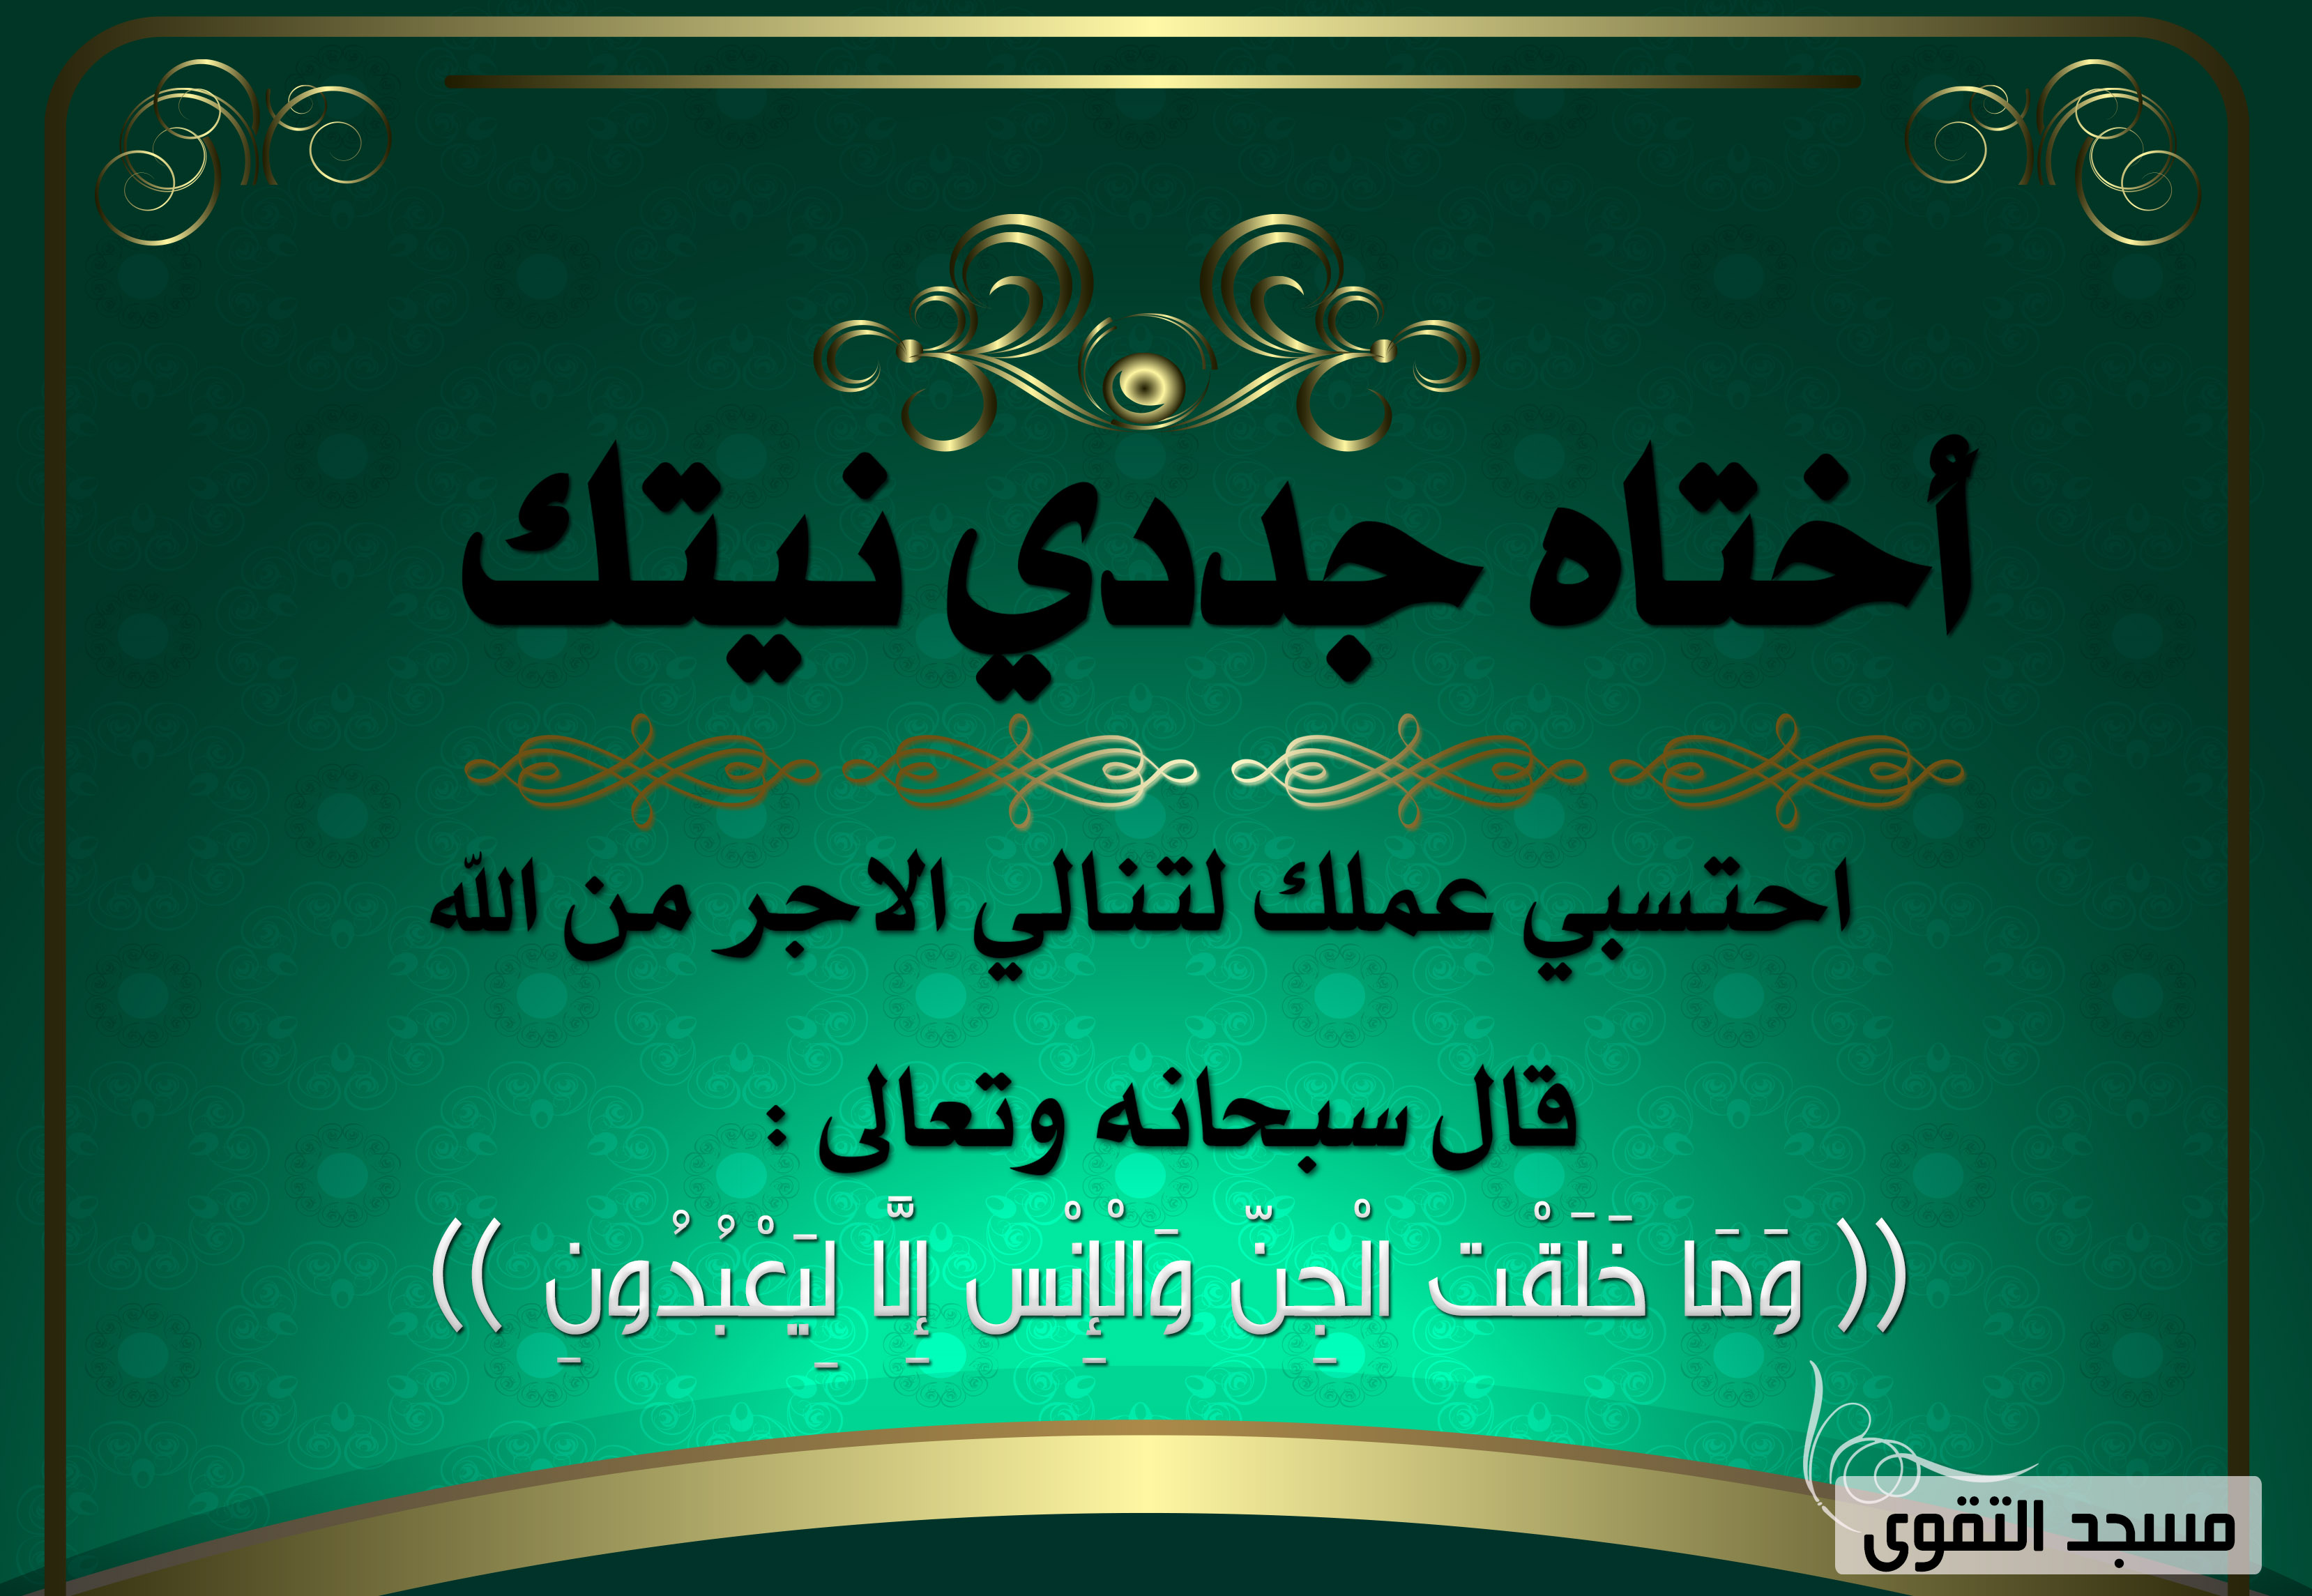 akhawat_islamway_1391113905__4444.jpg